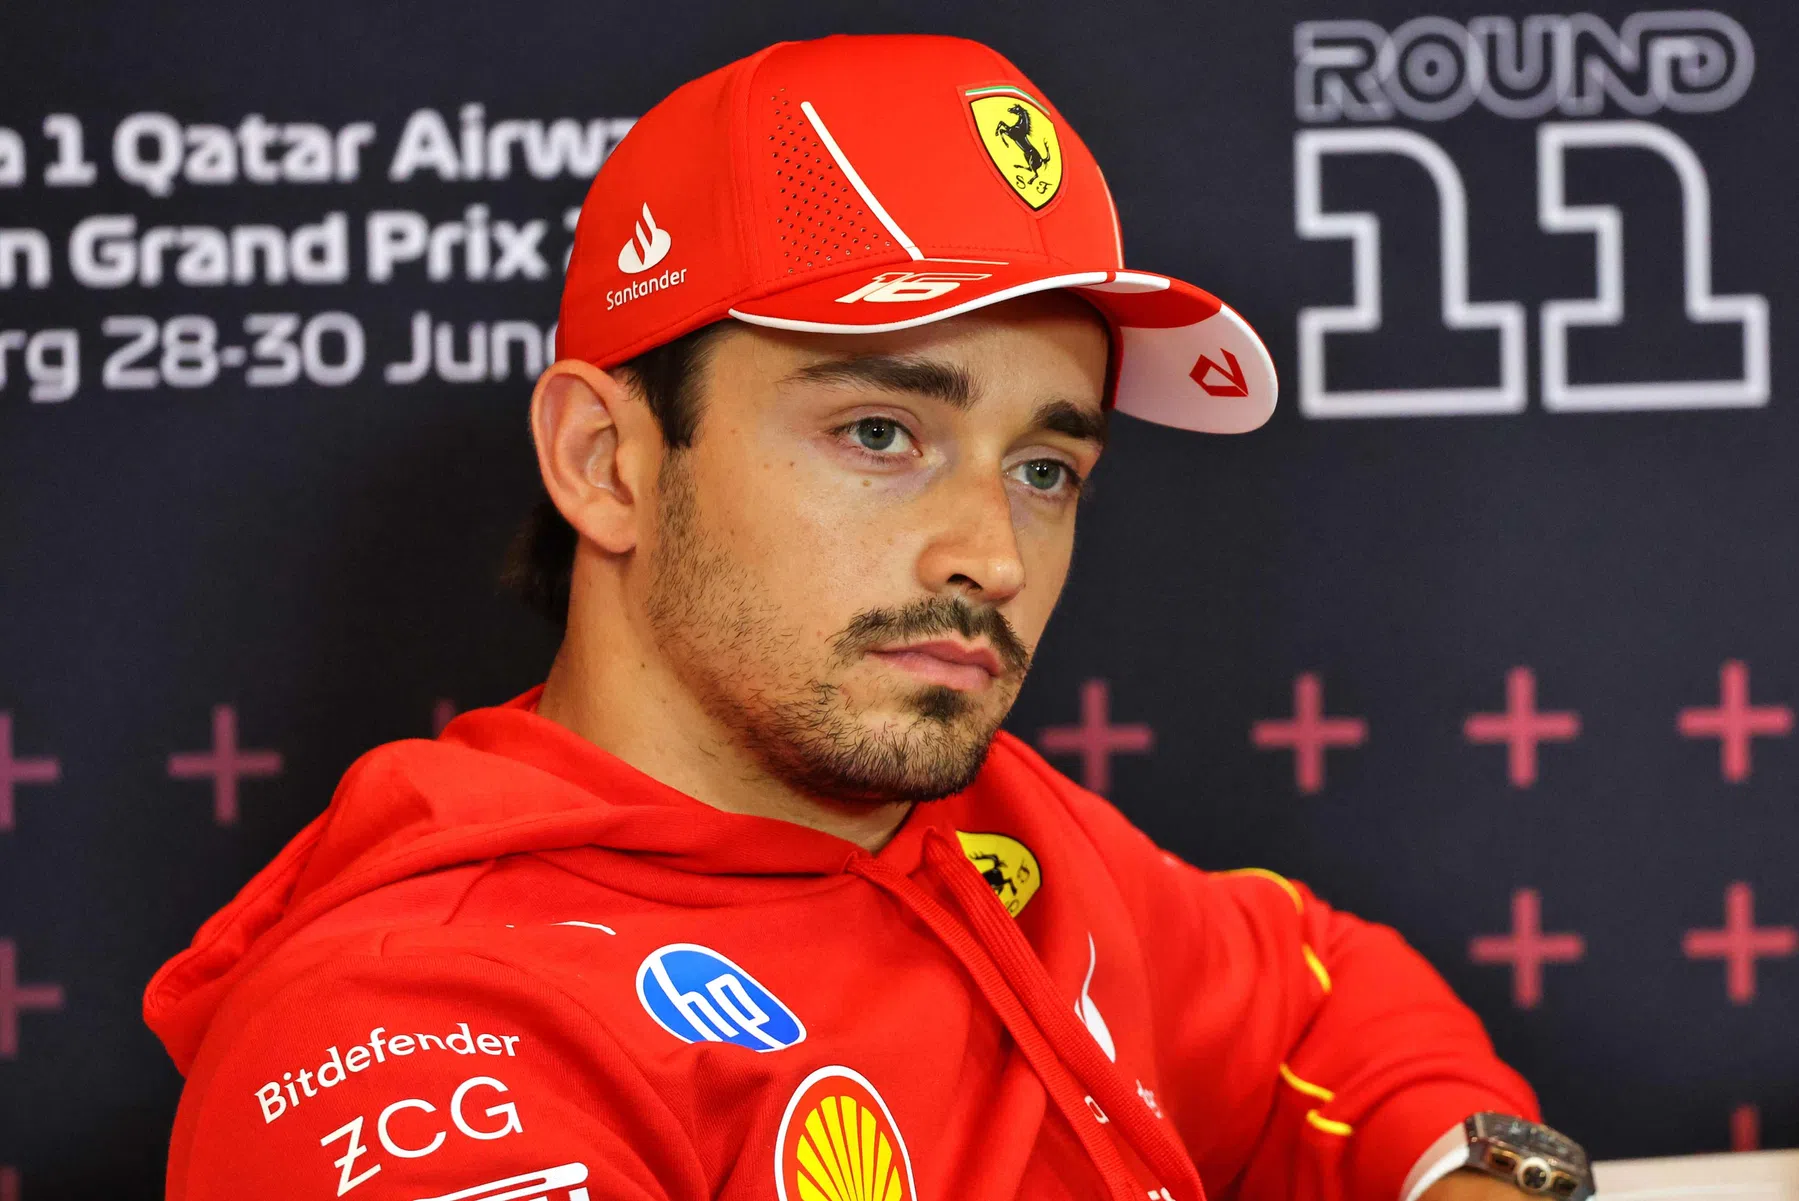 Pessimistic Leclerc looks ahead to Silverstone